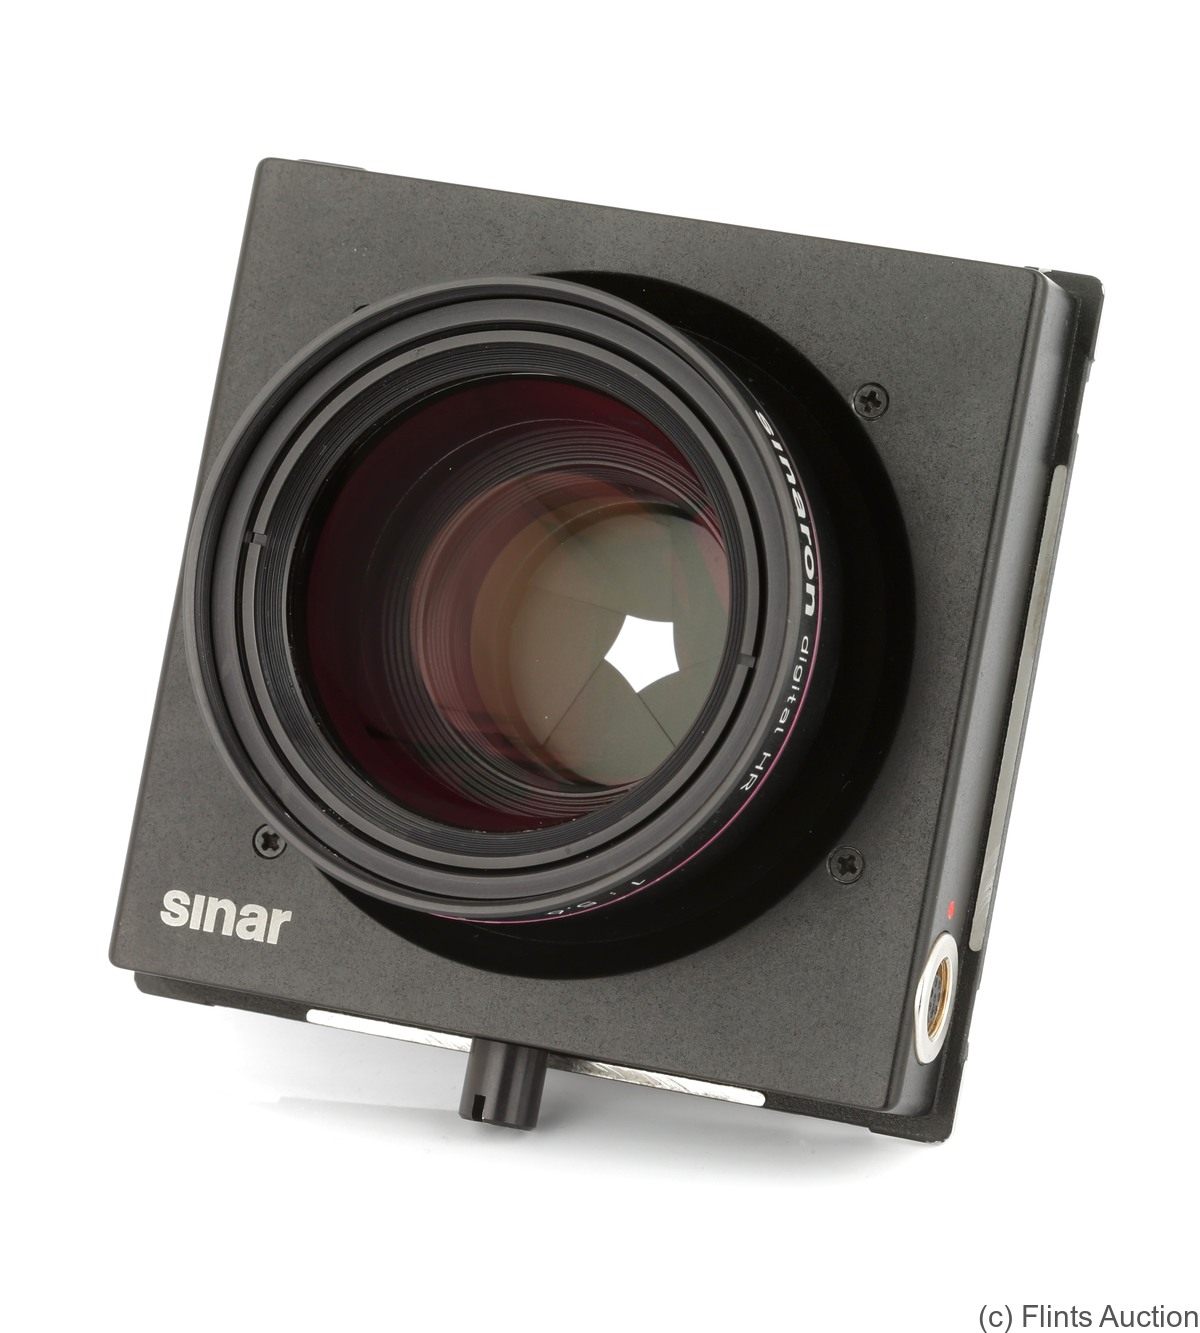 Sinar: 180mm (18cm) f5.6 Sinaron Digital HR camera